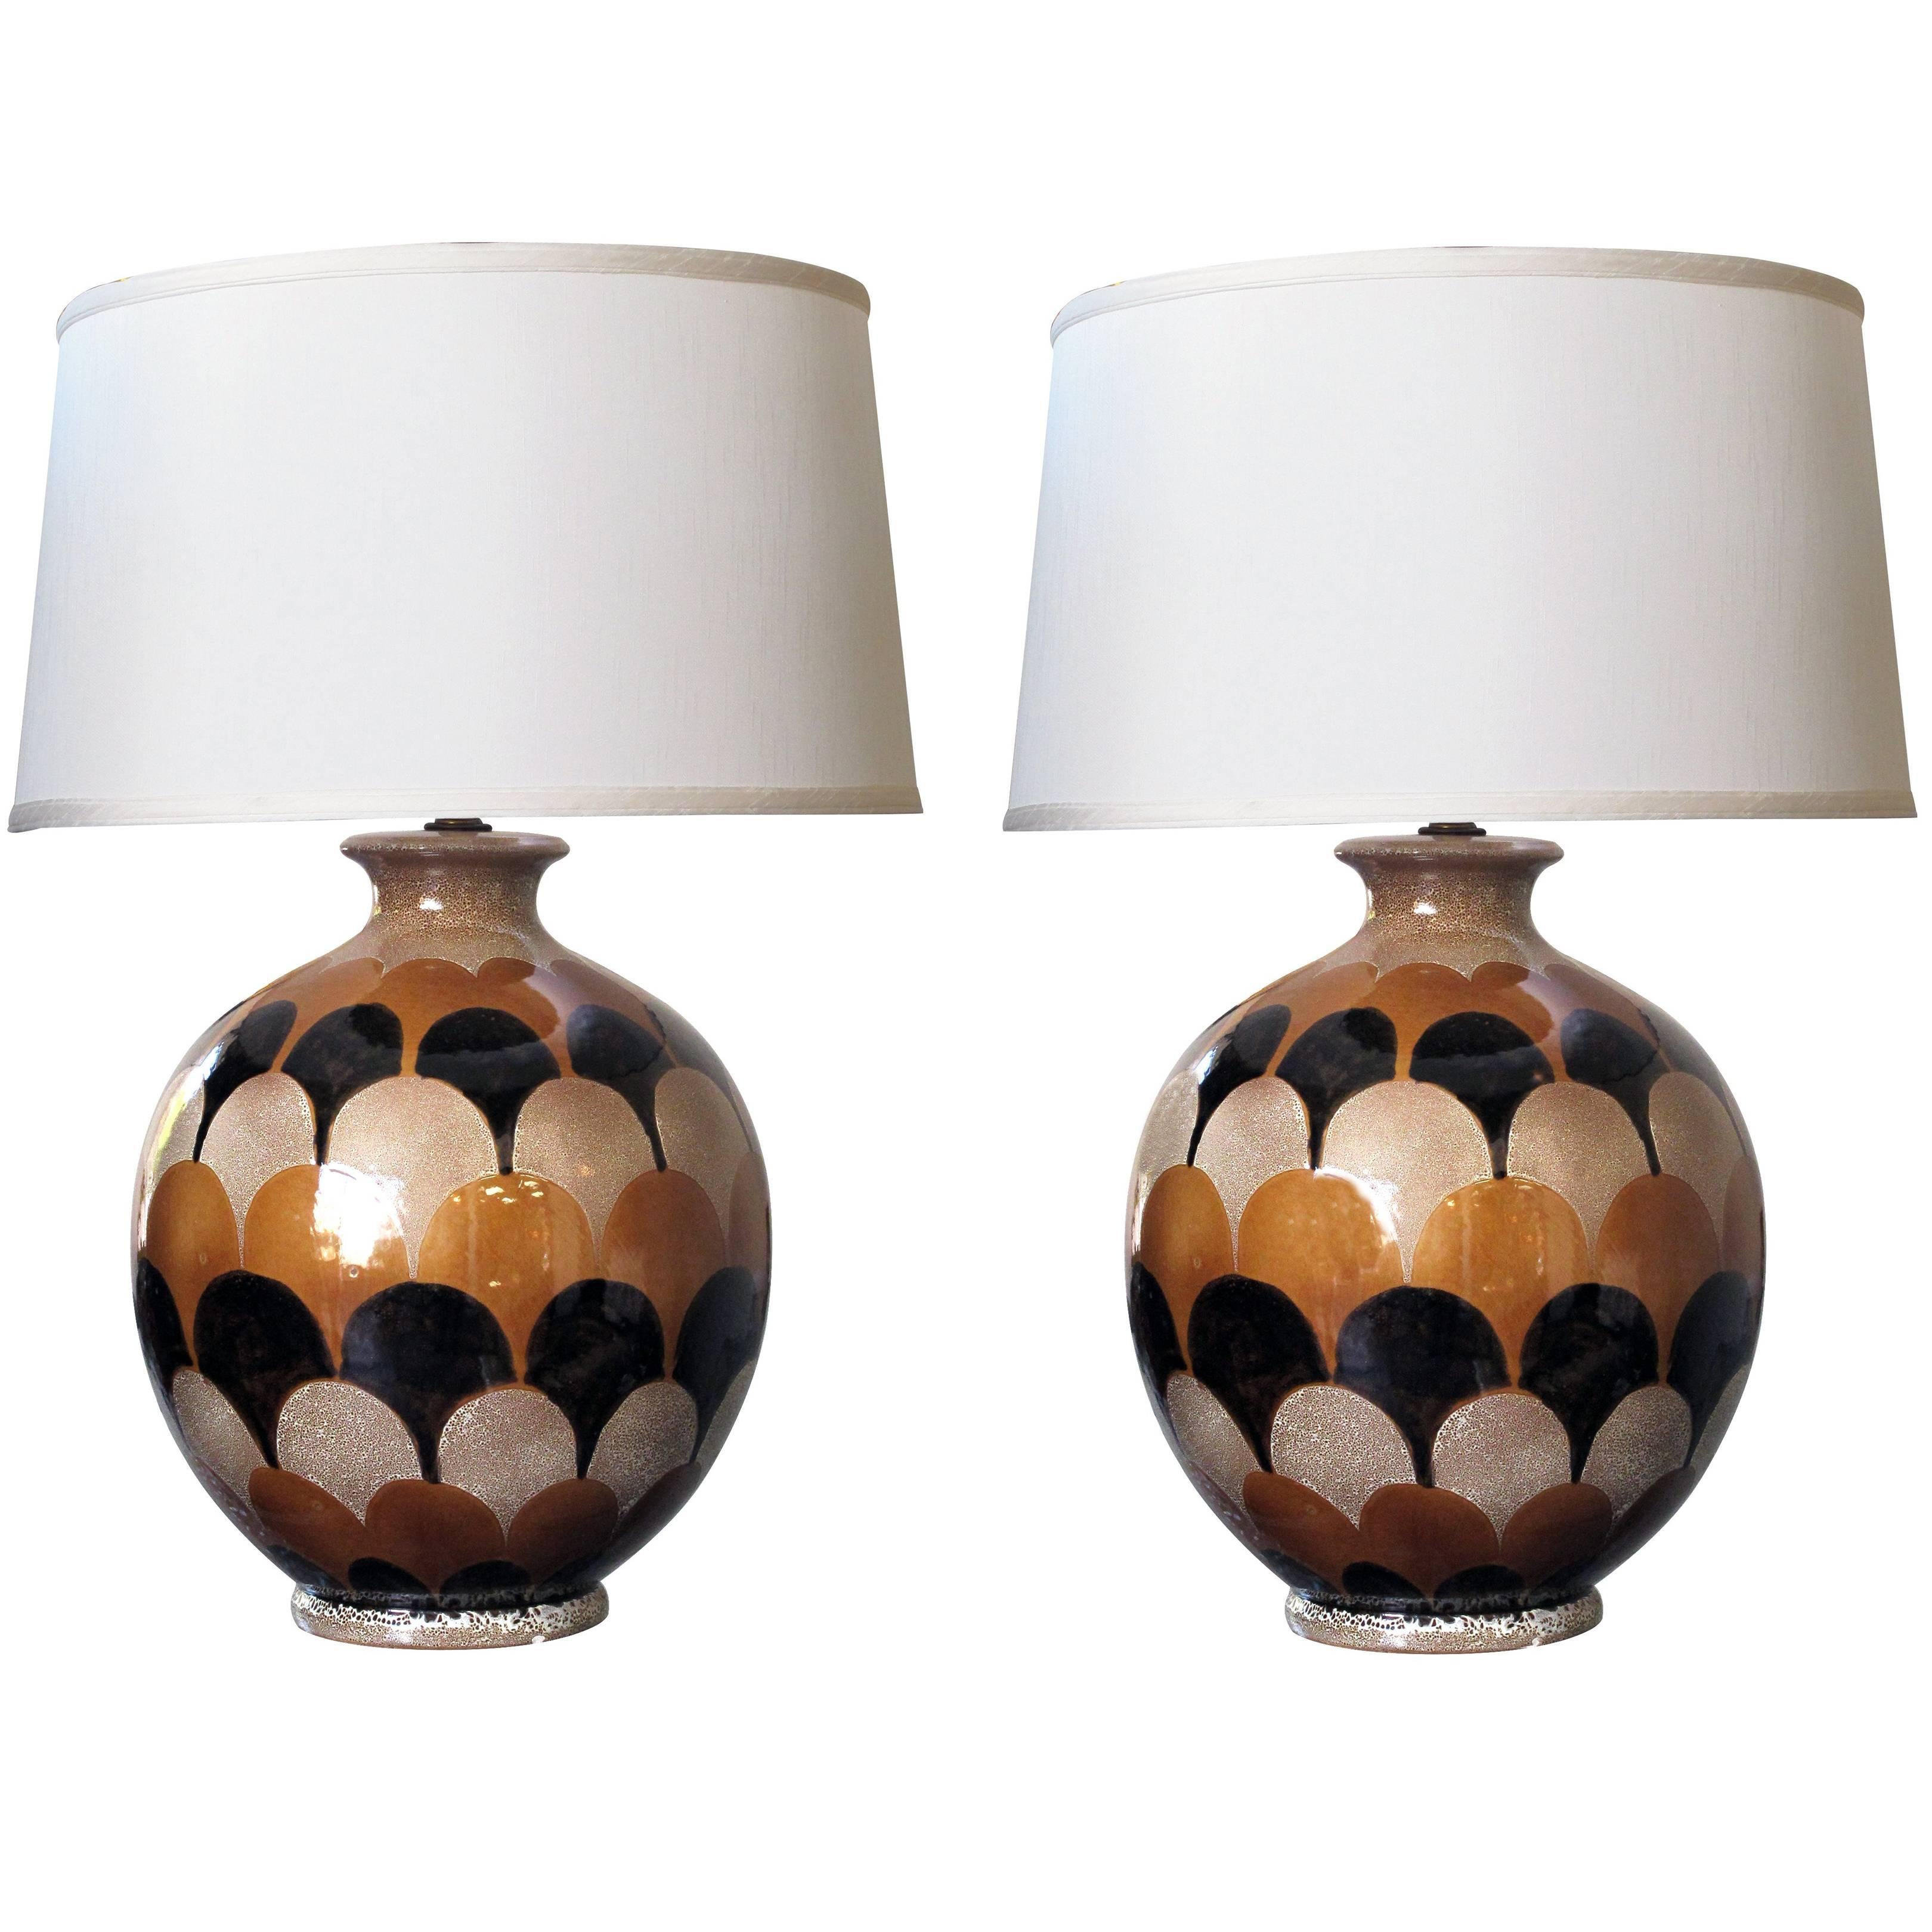 Pair of Italian Handmade Ovoid-Shaped Ceramic Lamps with Imbricating Glaze